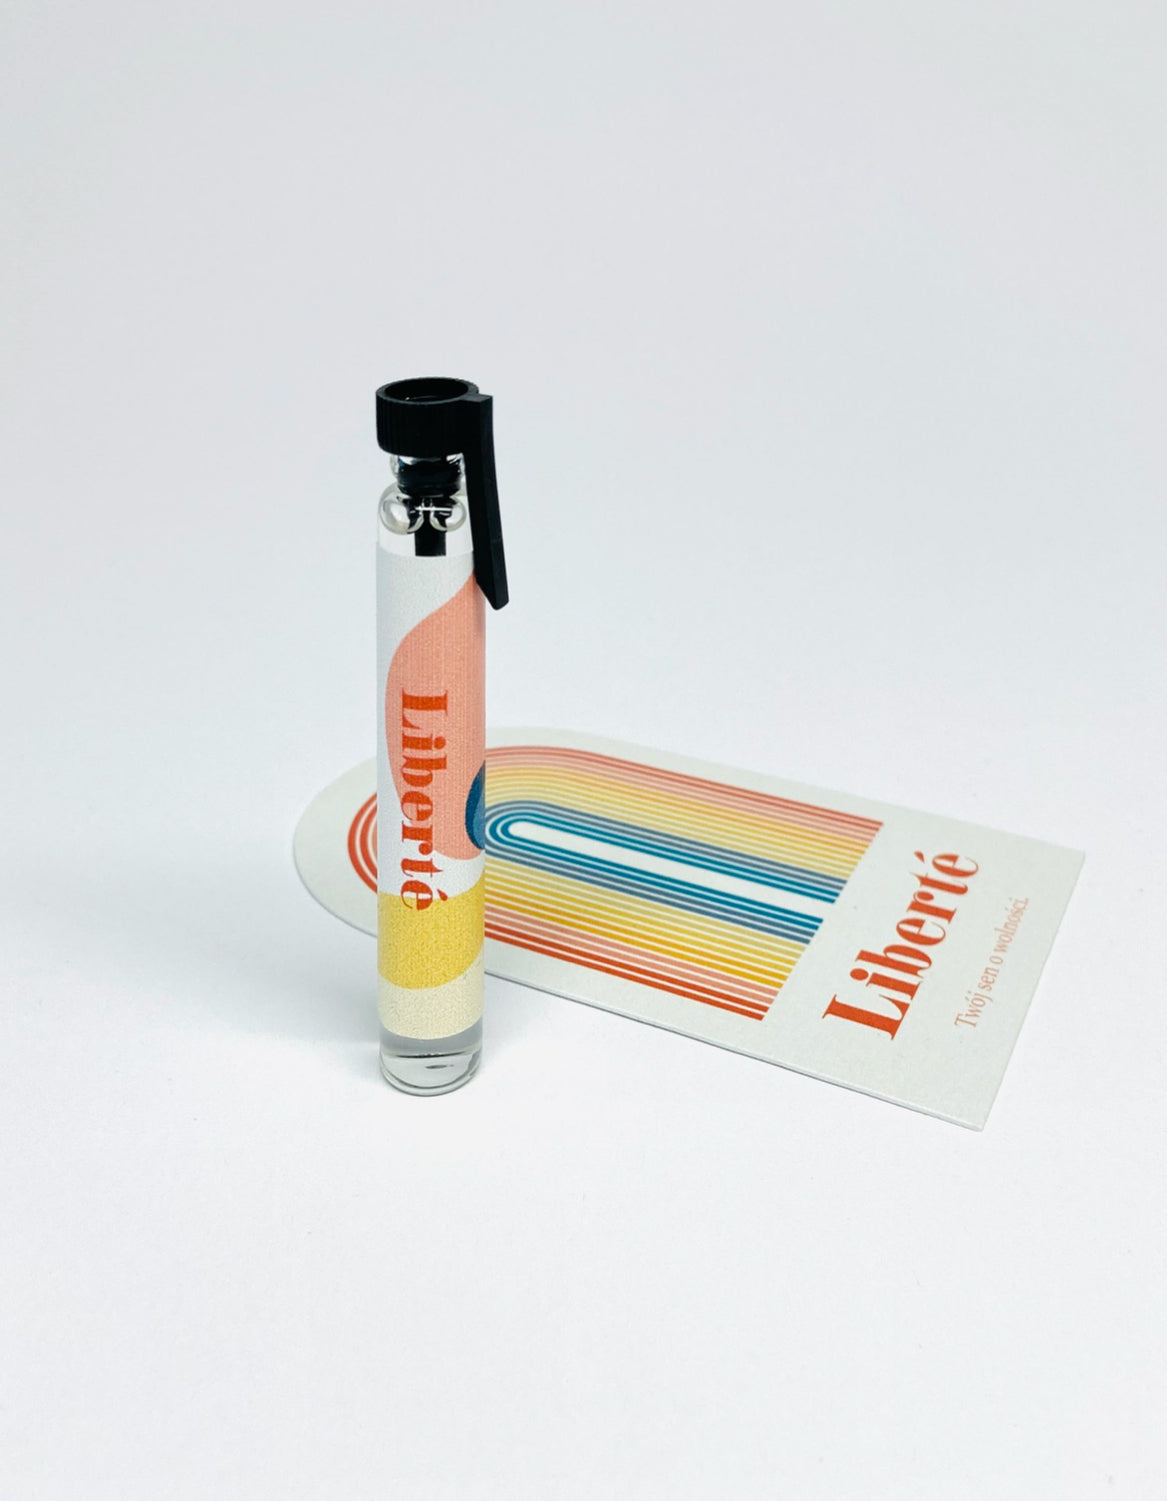 Perfume Looks by Luks - SET 3 Testers 3ml